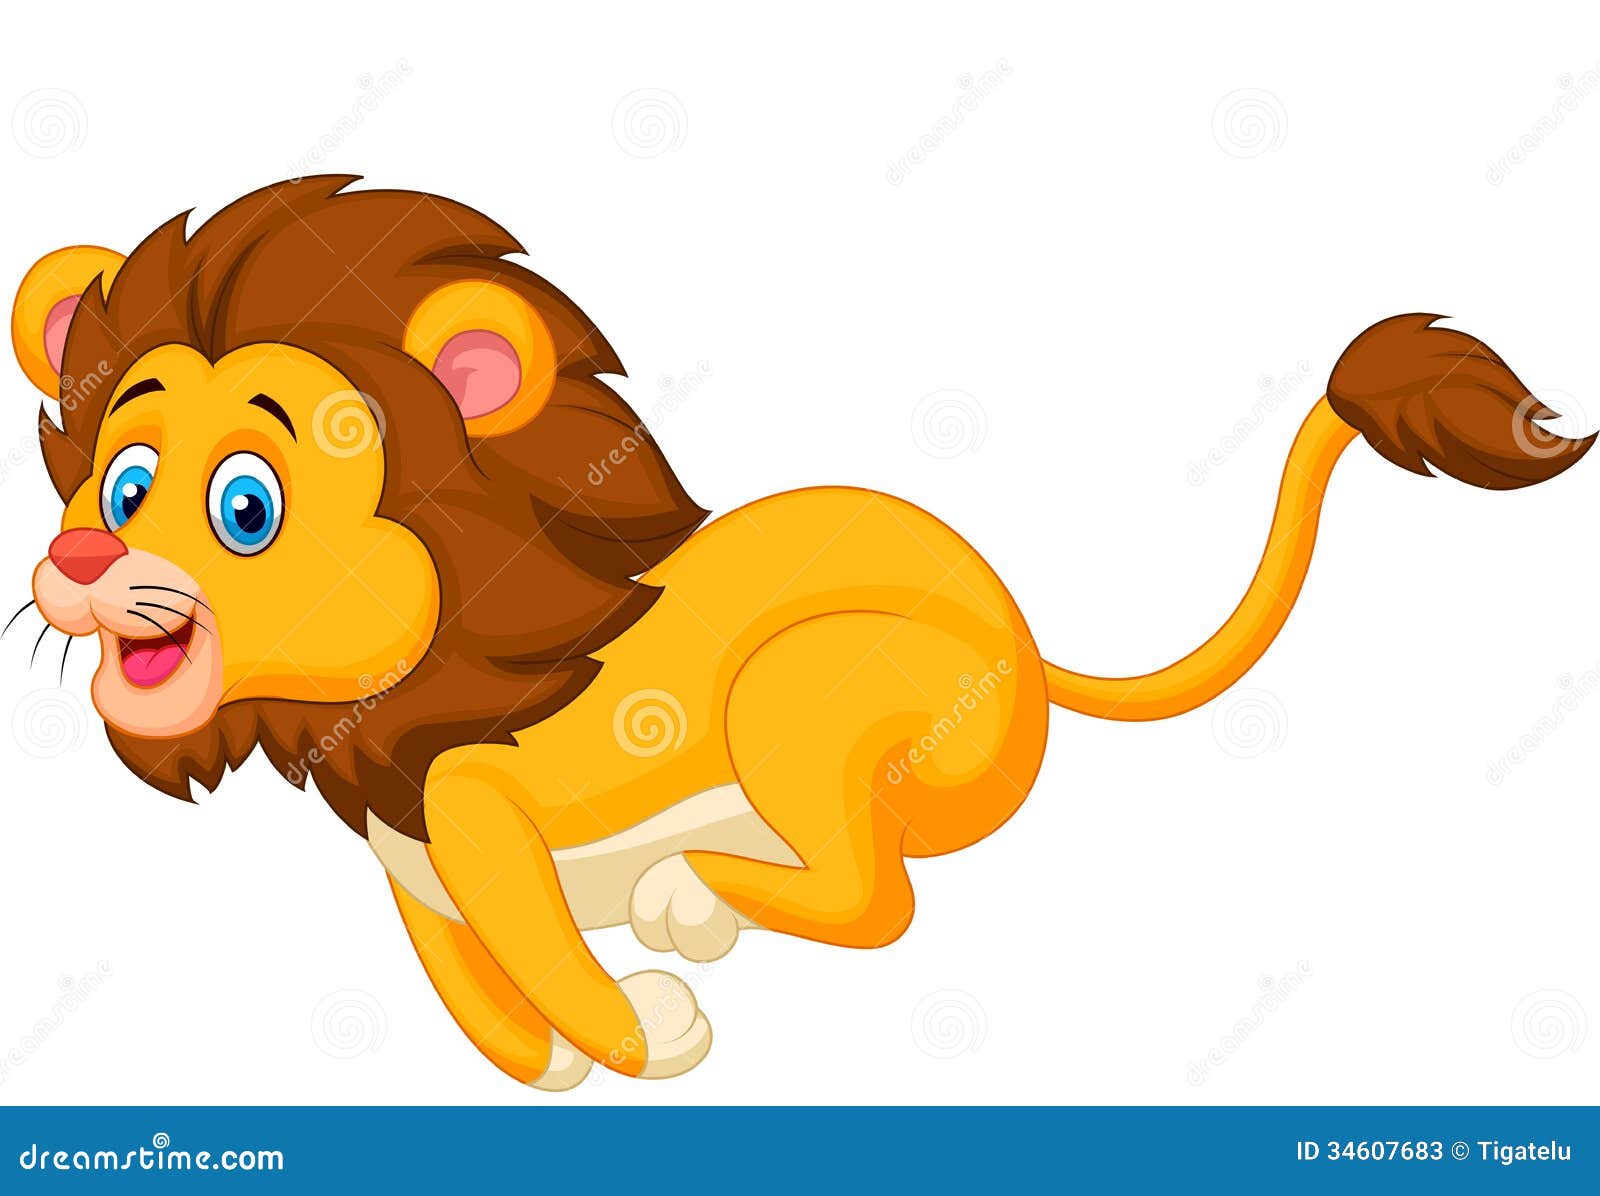 Cartoon Cub Lion Running Stock Illustrations – 24 Cartoon Cub Lion Running  Stock Illustrations, Vectors & Clipart - Dreamstime